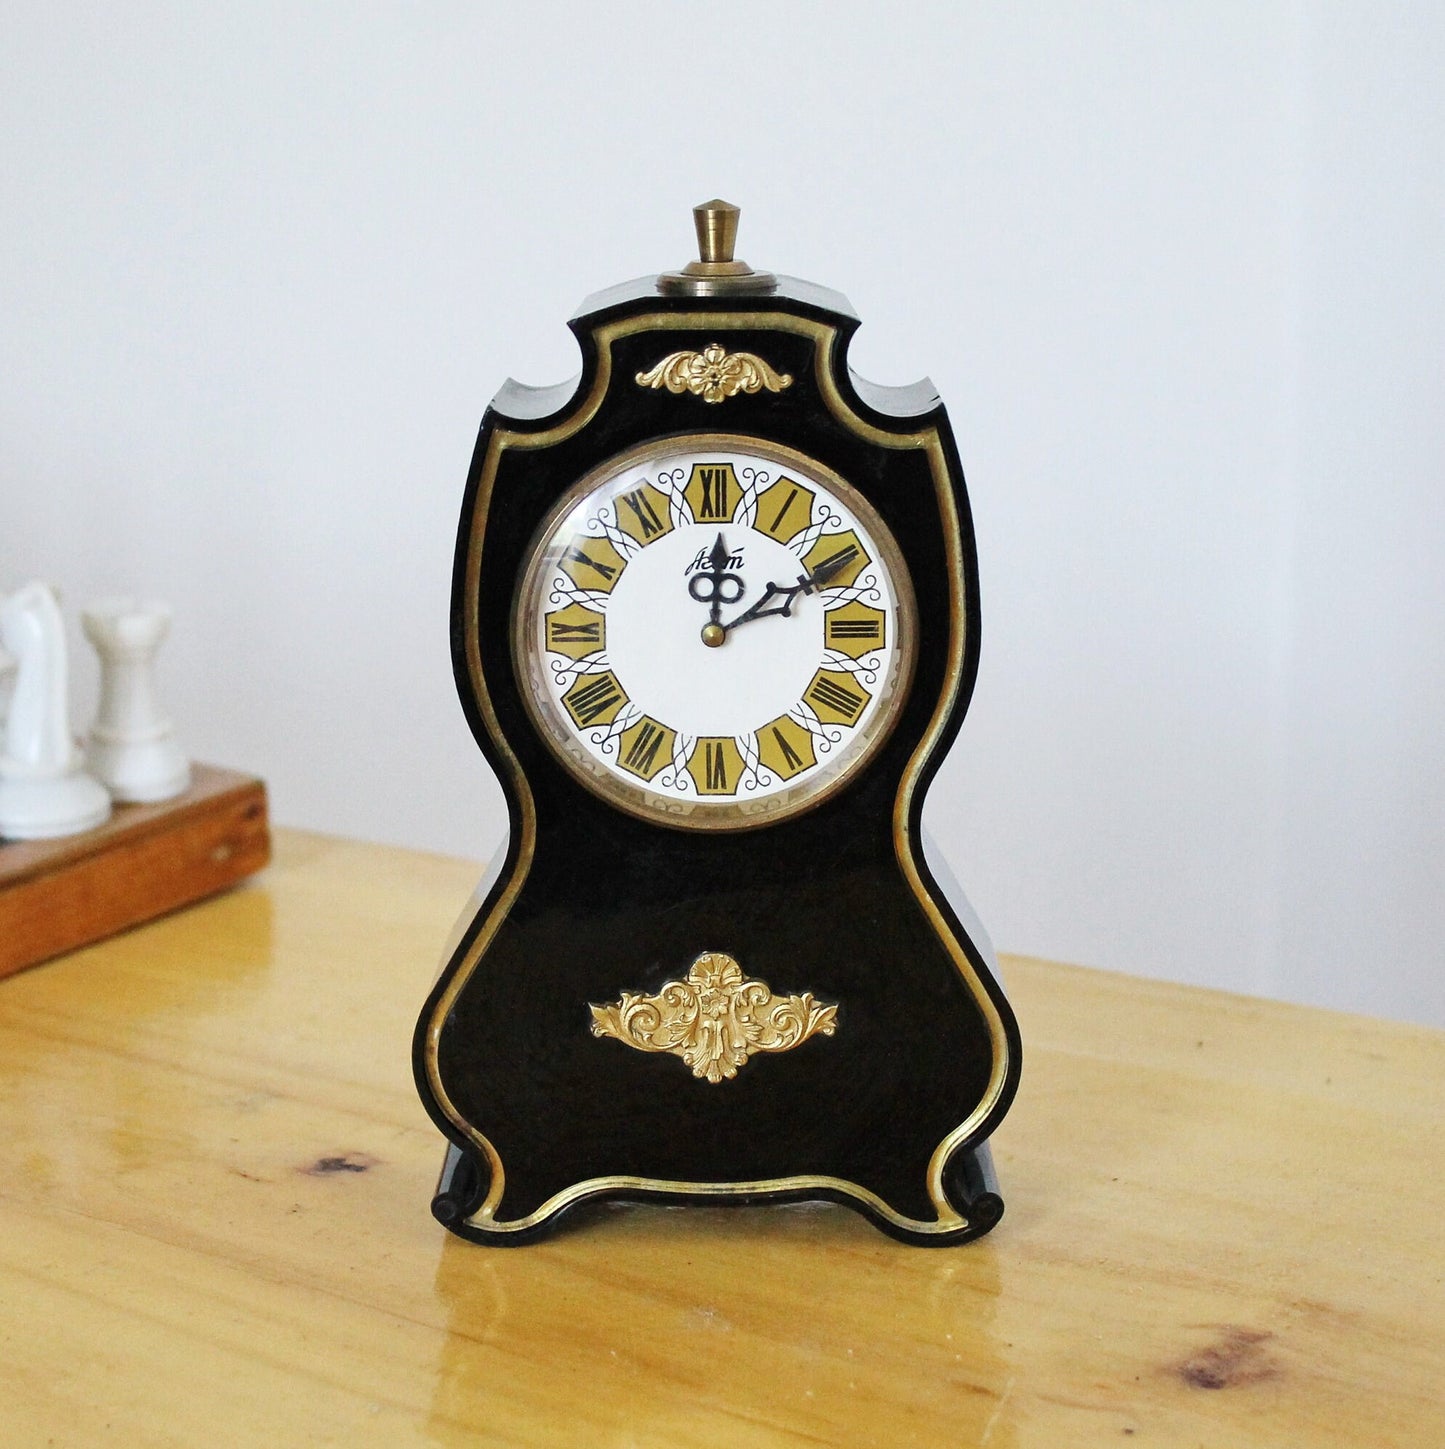 Mechanical alarm clock Agat - vintage clock from USSR era - 1960s-1970s - Soviet alarm clock